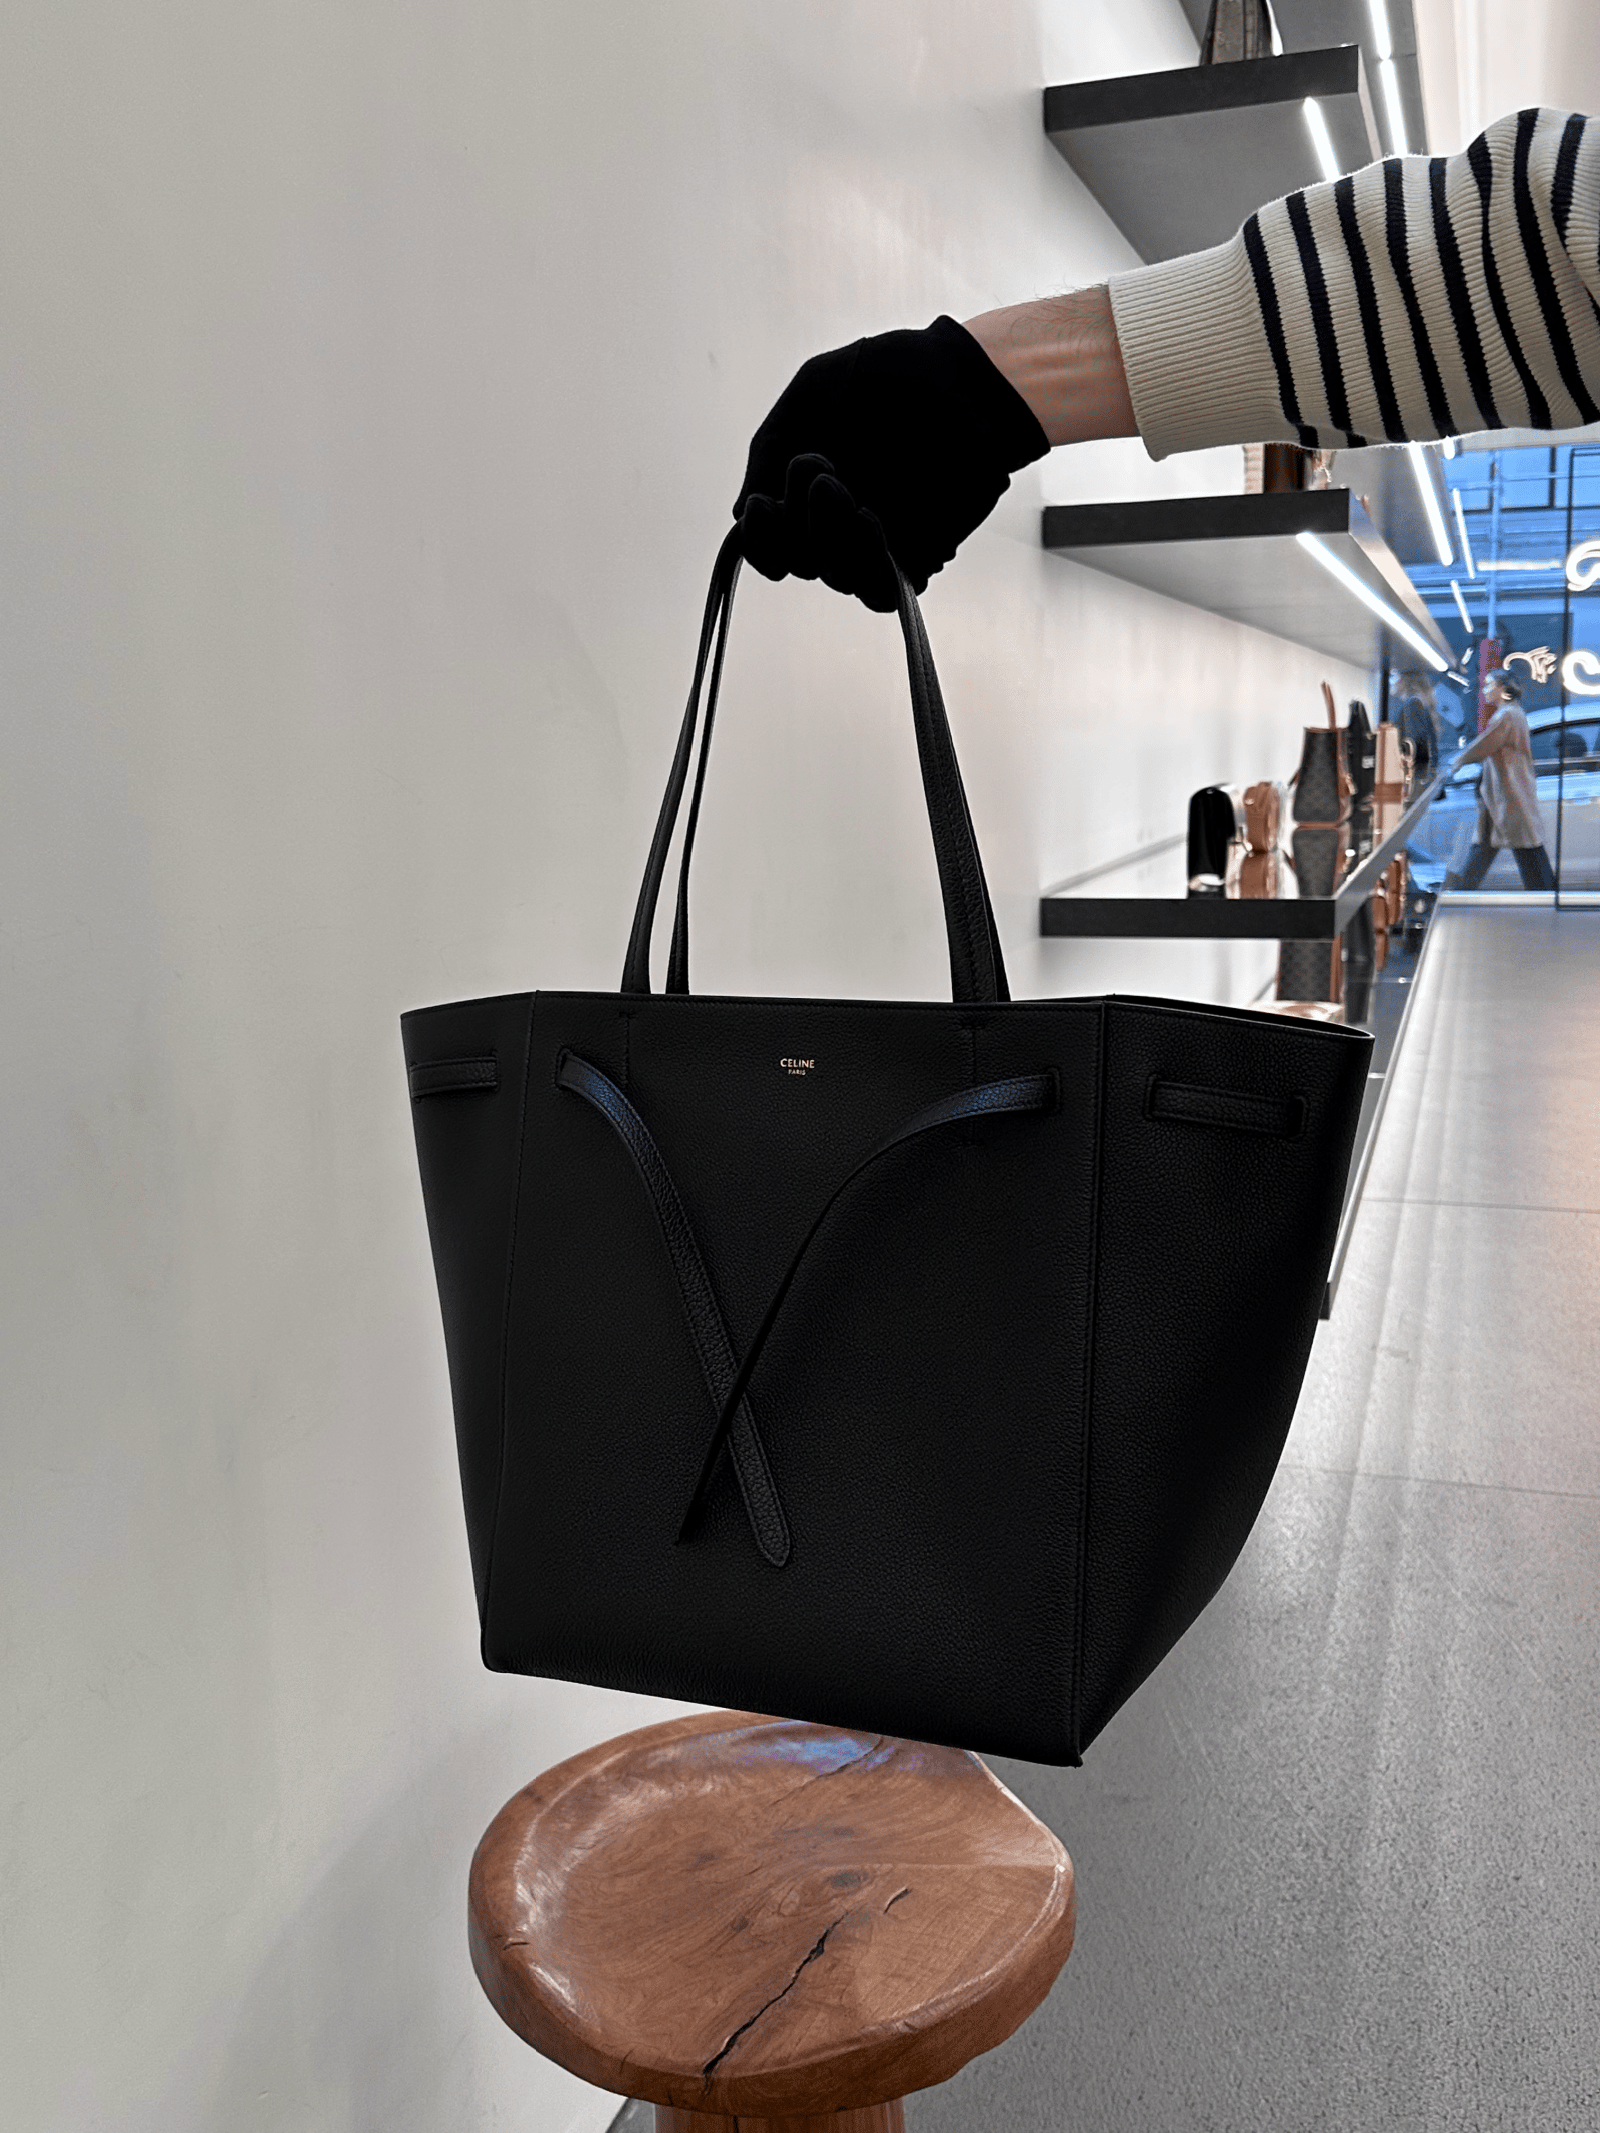 Designer Bags to Buy in Paris Celine Tote